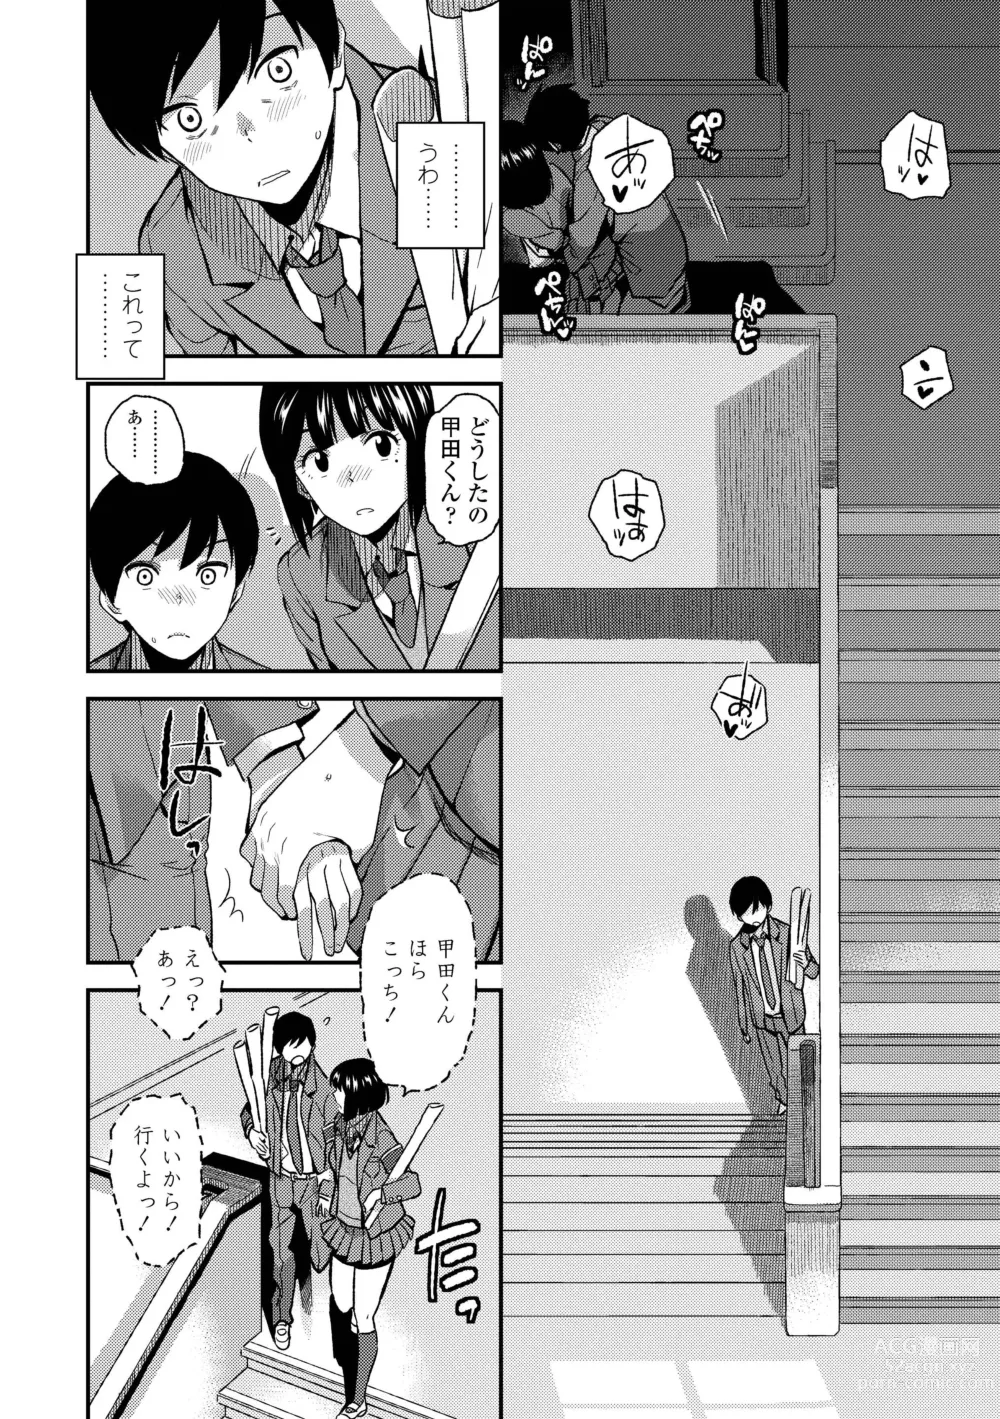 Page 158 of manga BorderLine